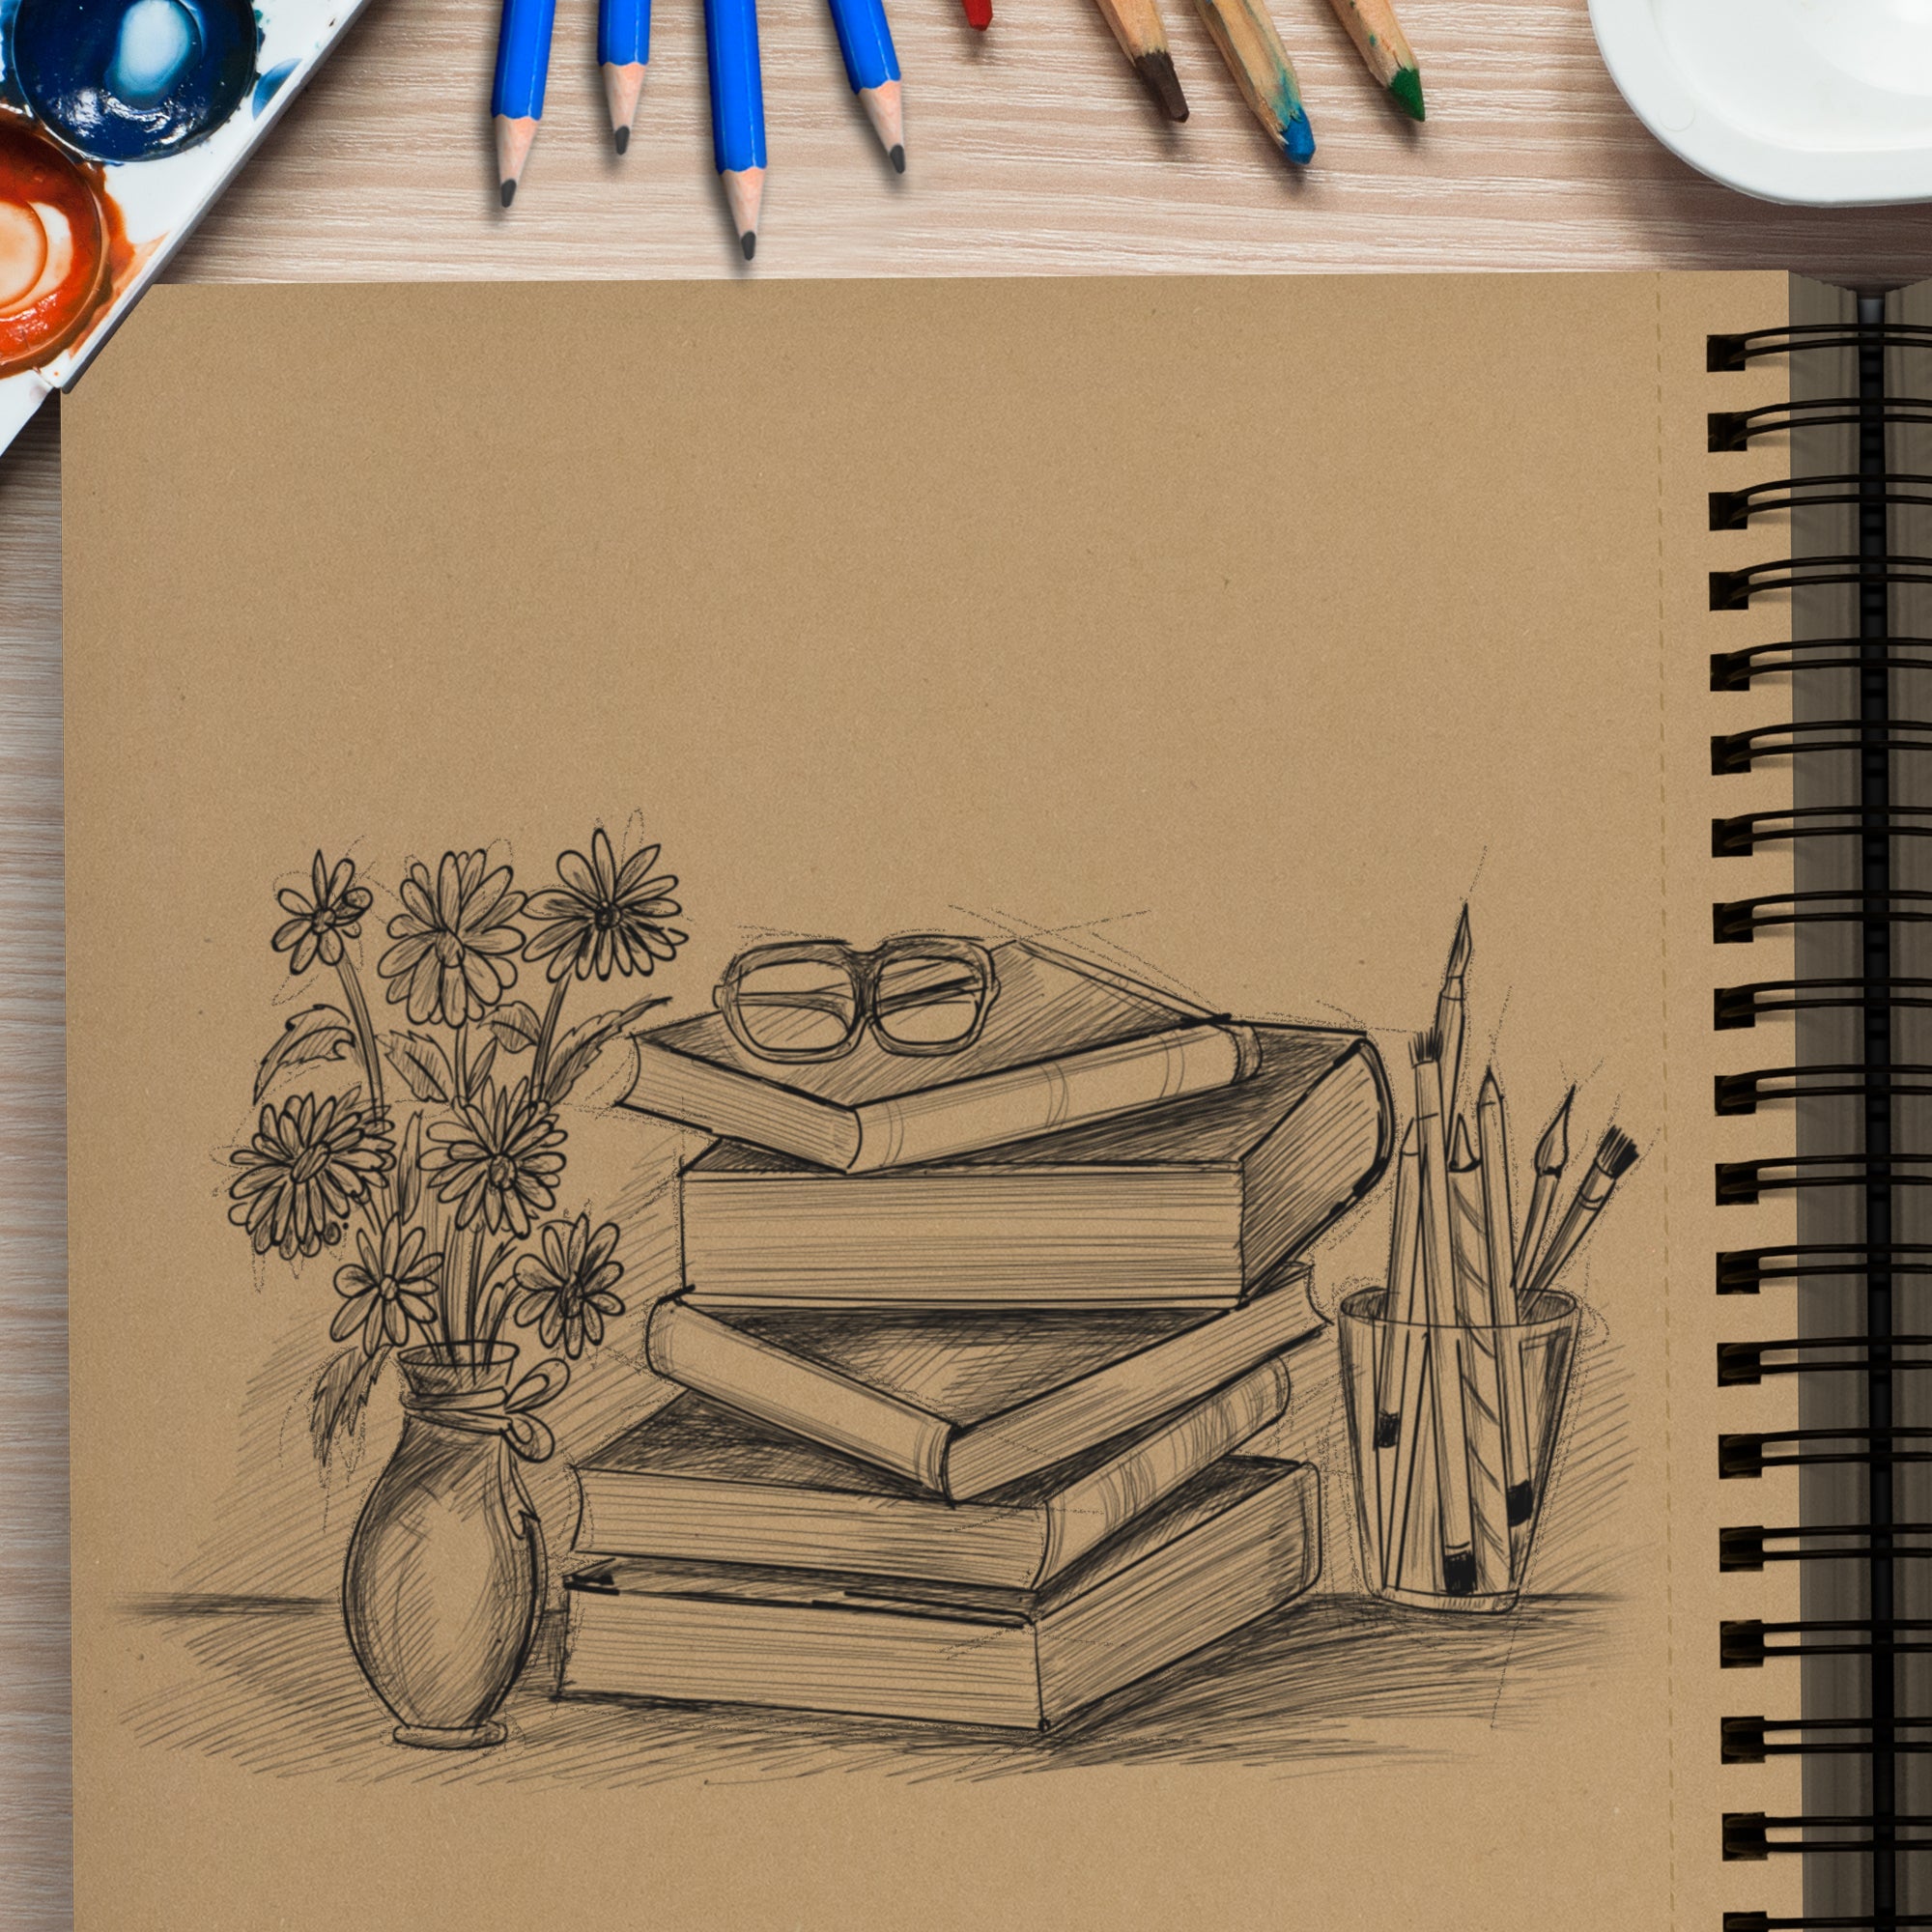 Small Toned Tan Paper Sketchbooks - 3 Pack – Sketch Wallet